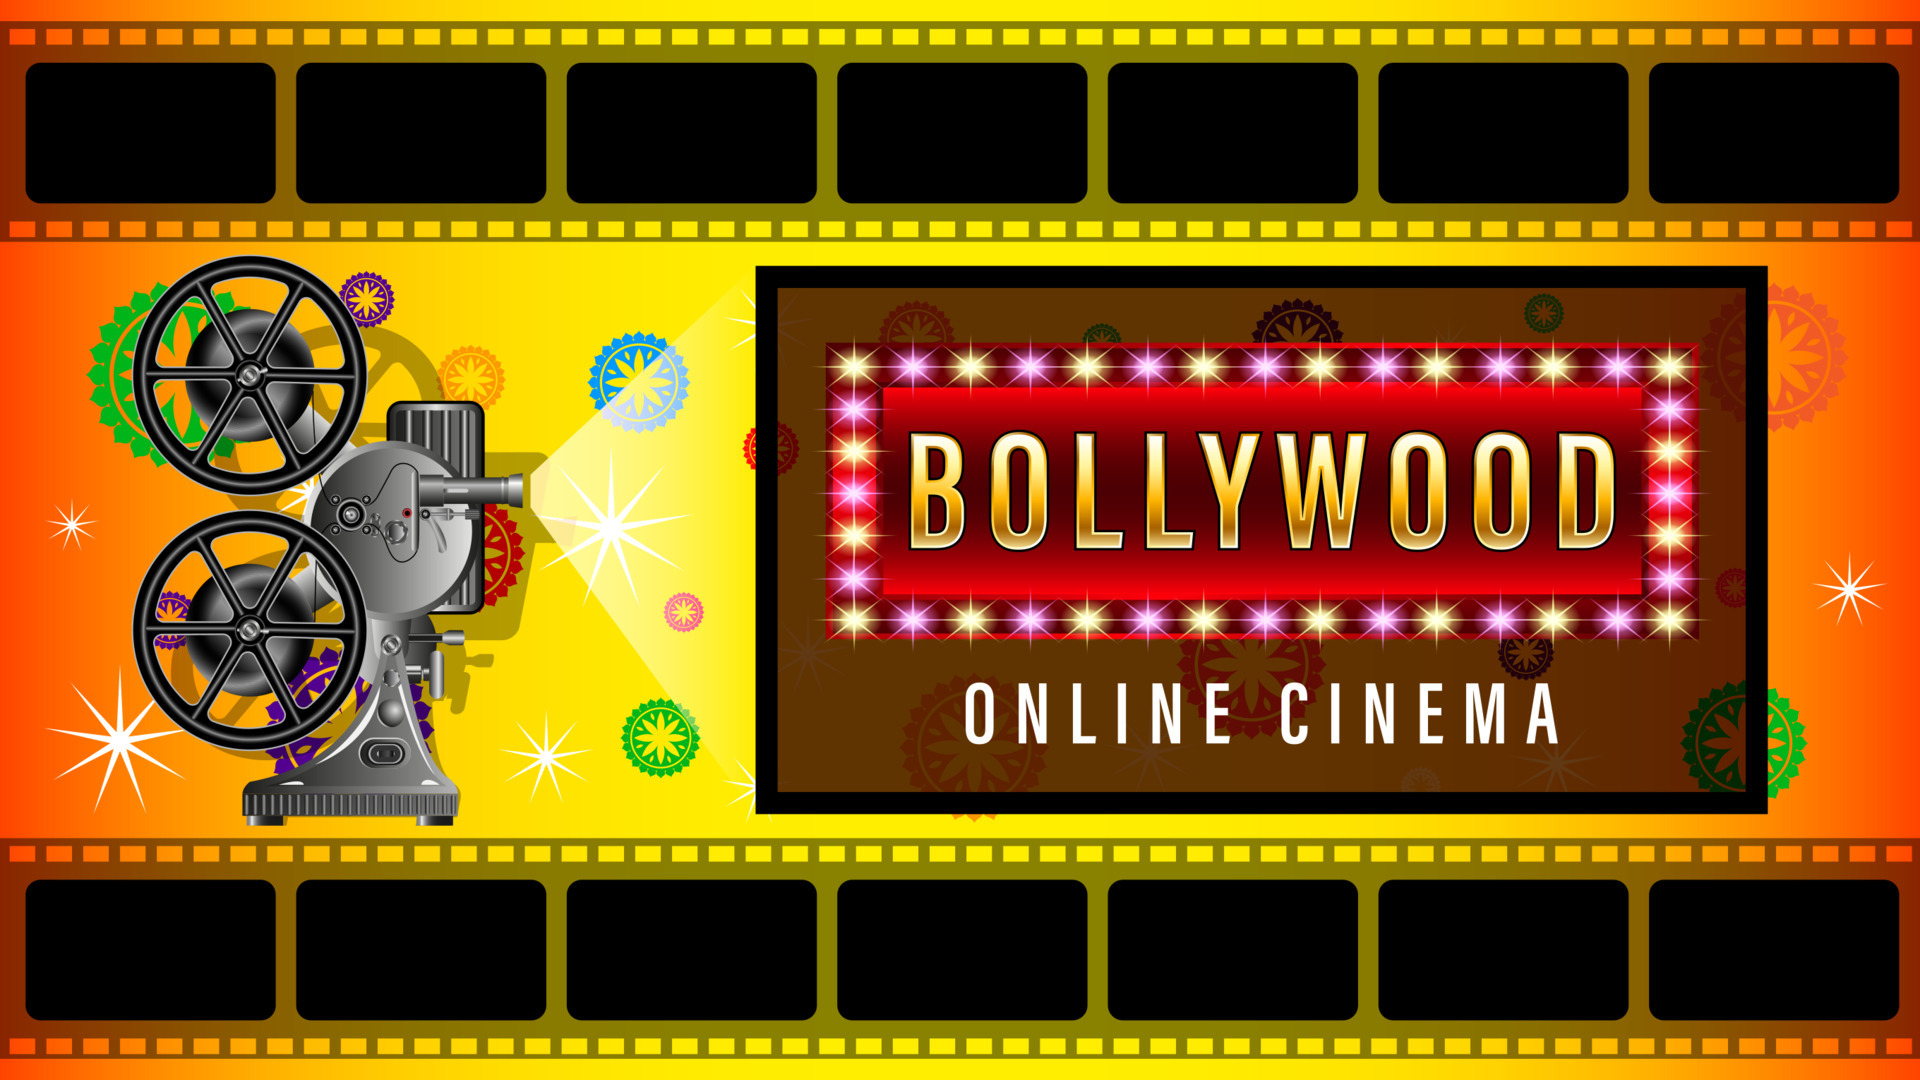 Bollywood Online Cinema film background 4917115 Vector Art at Vecteezy